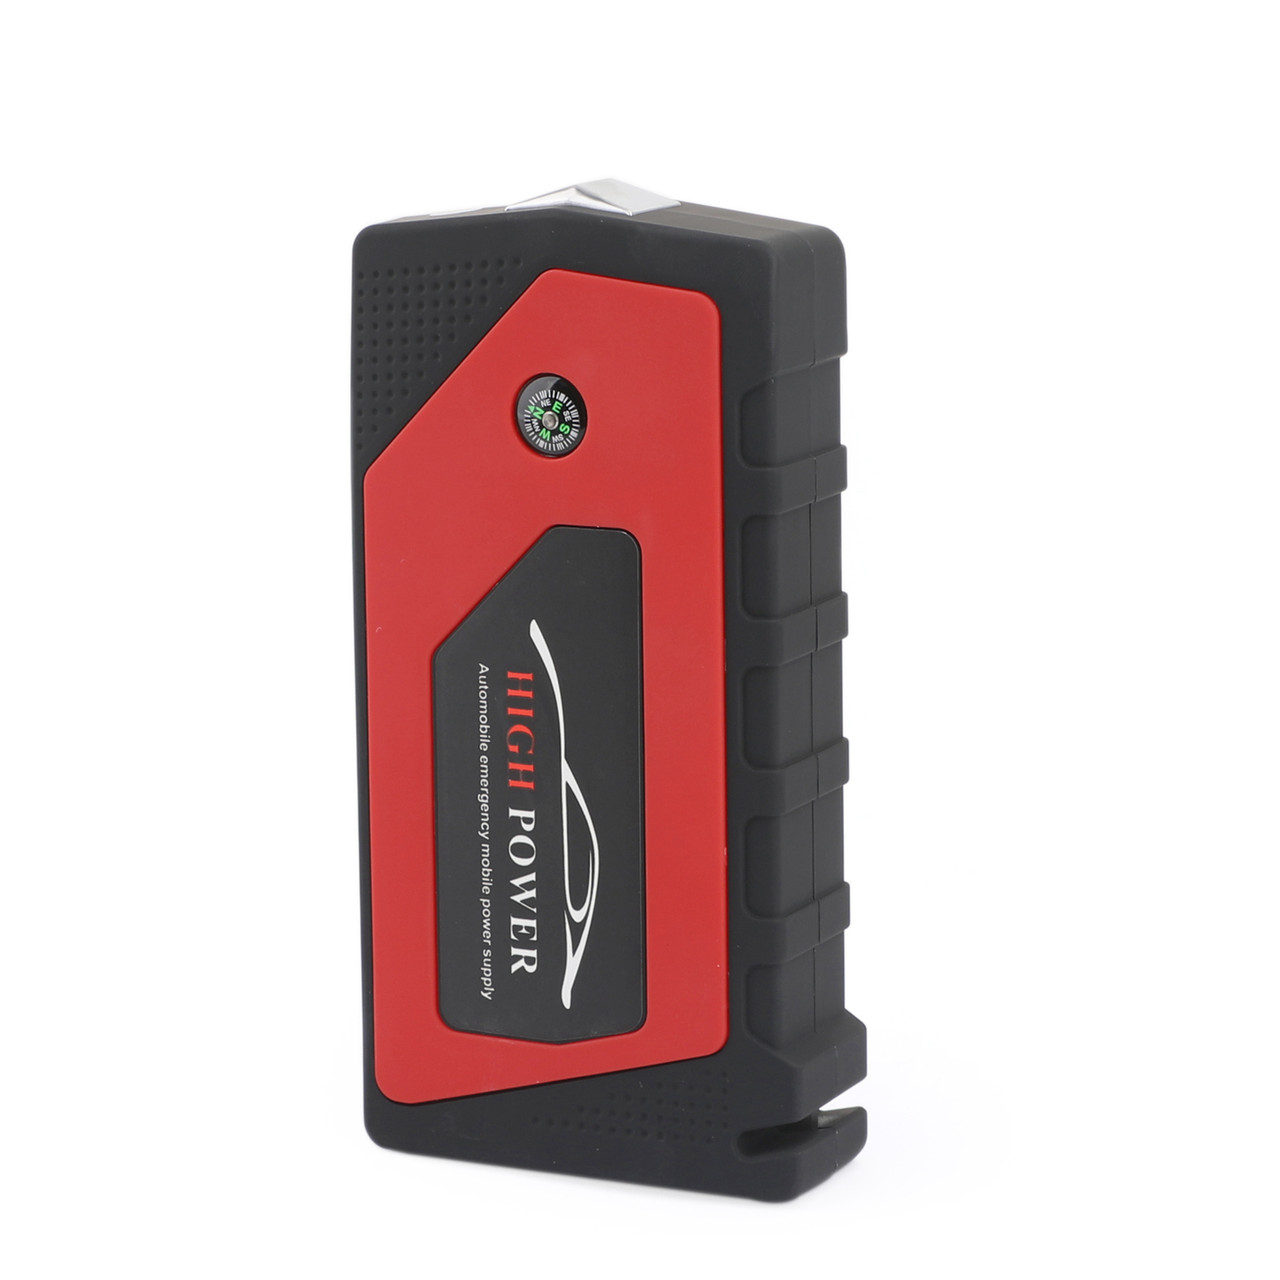 69800mAh Car Jump Starter Portable 4-USB Power Bank Battery Booster Clamp Kits